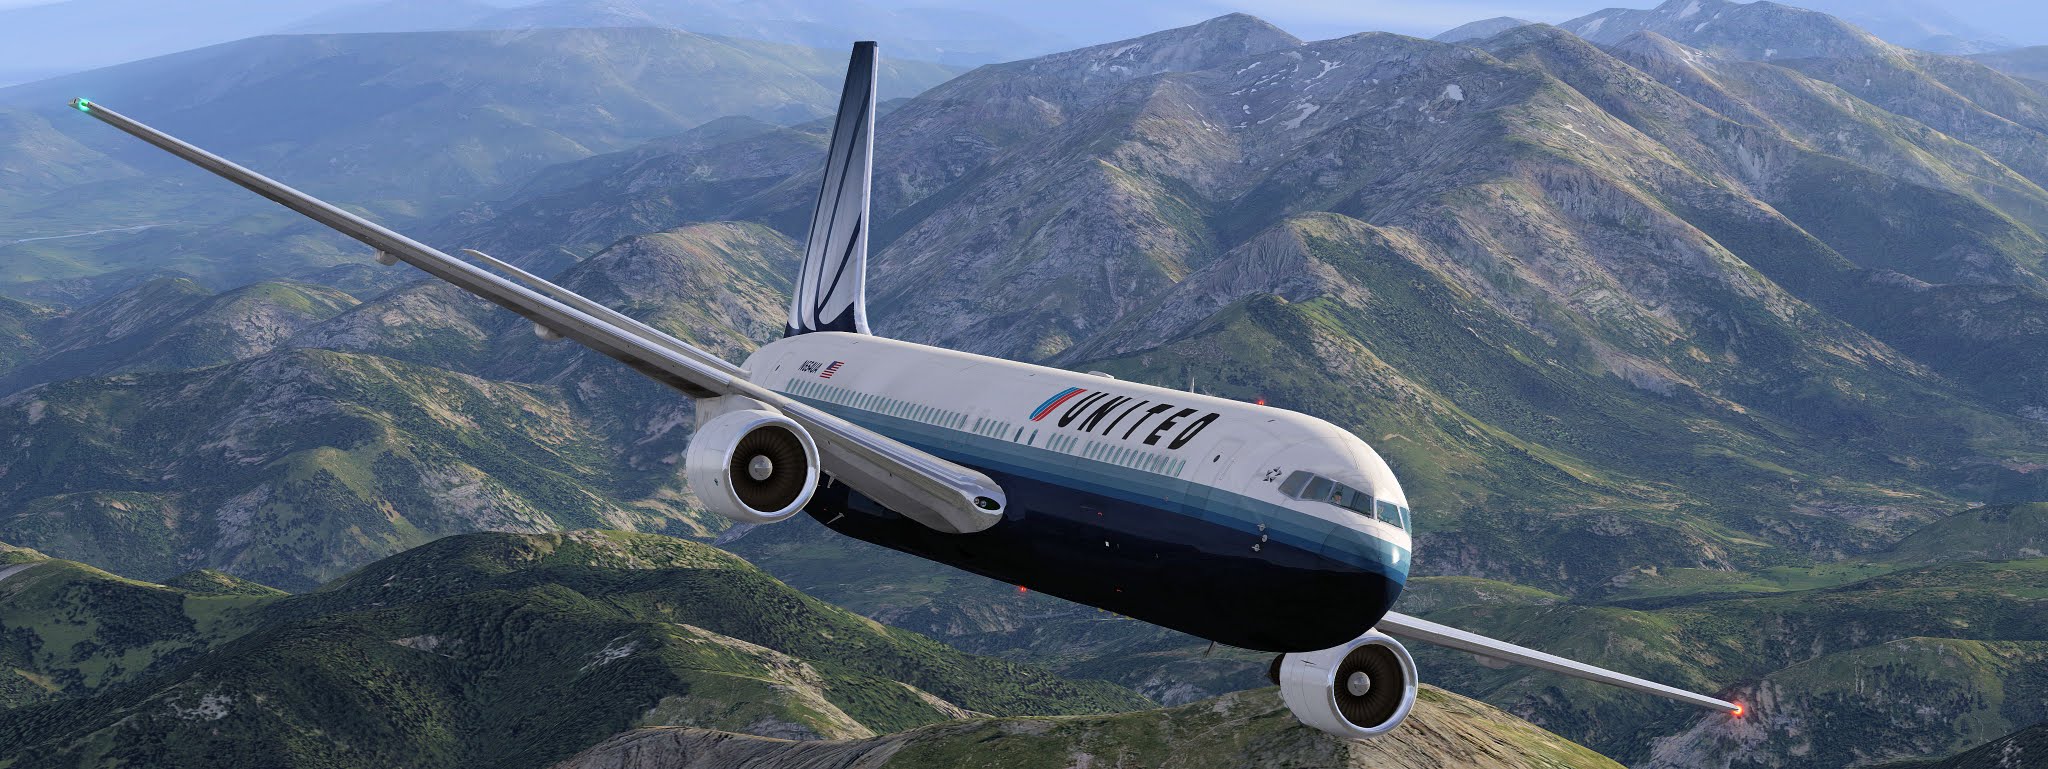 Boeing 767 - screenshots